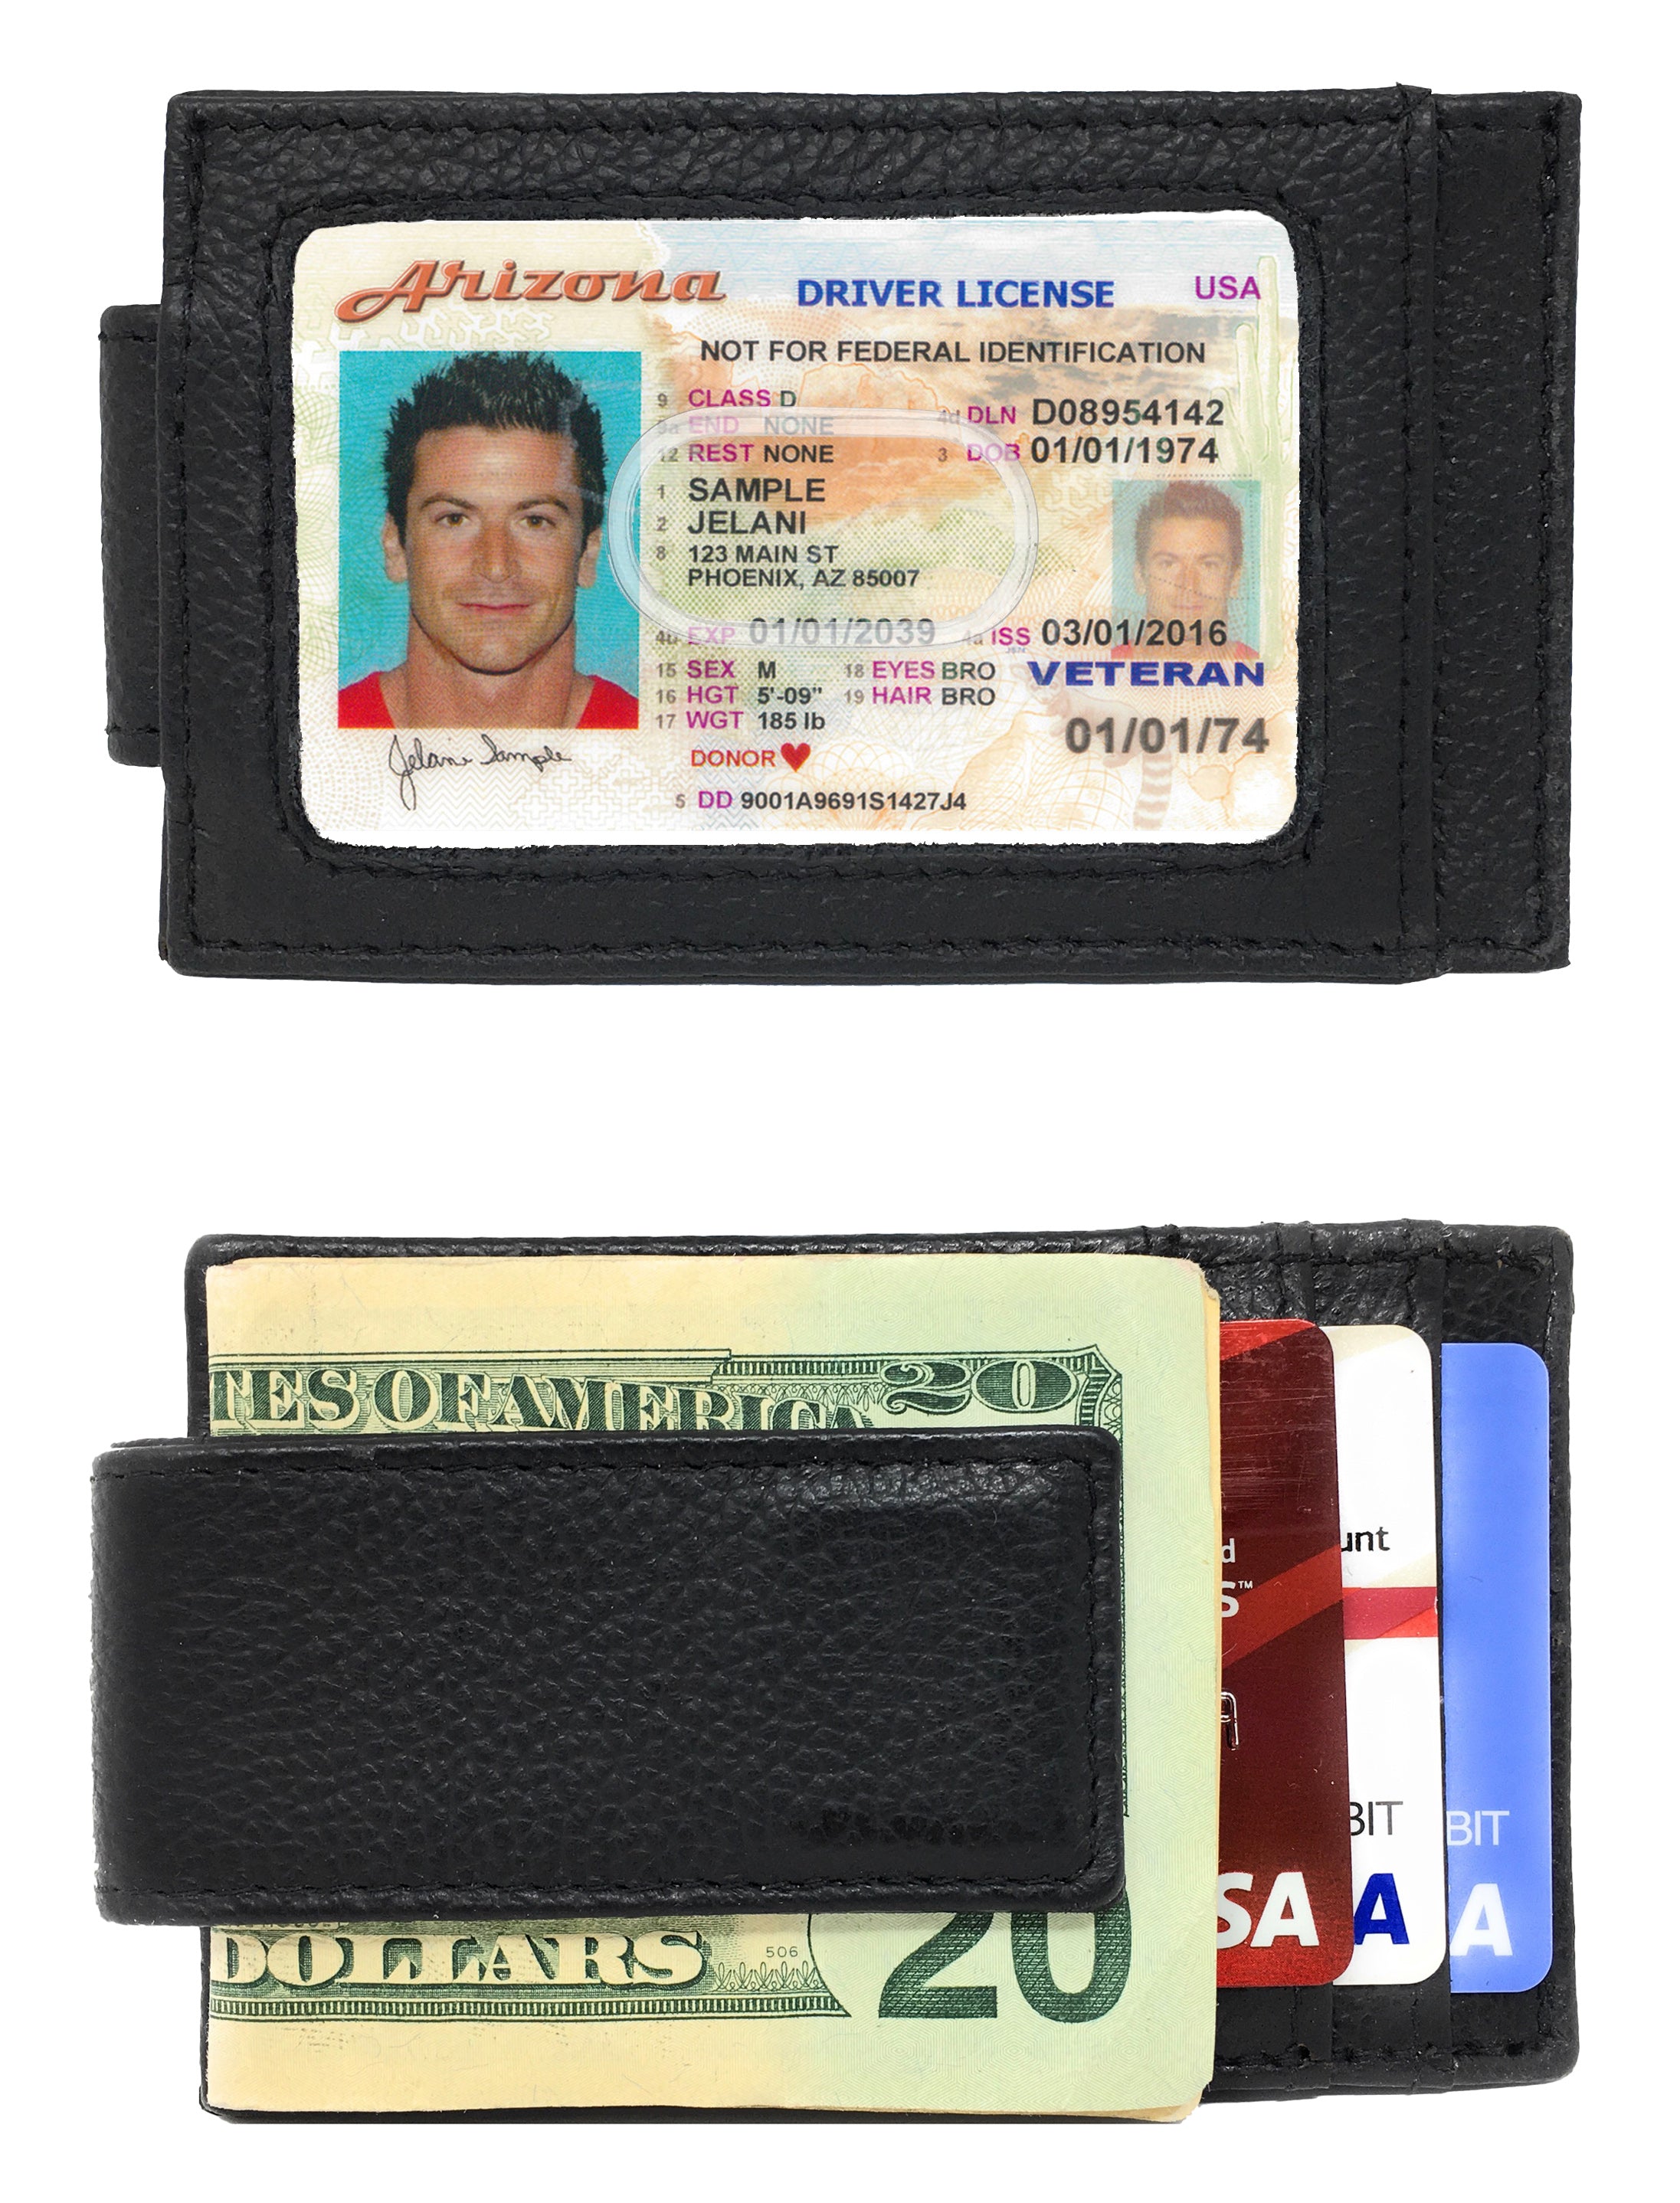 Urban-Peacock Minimalist Front Pocket Leather Money Clip RFID Blocking Wallet w/ Gift Box (Black)